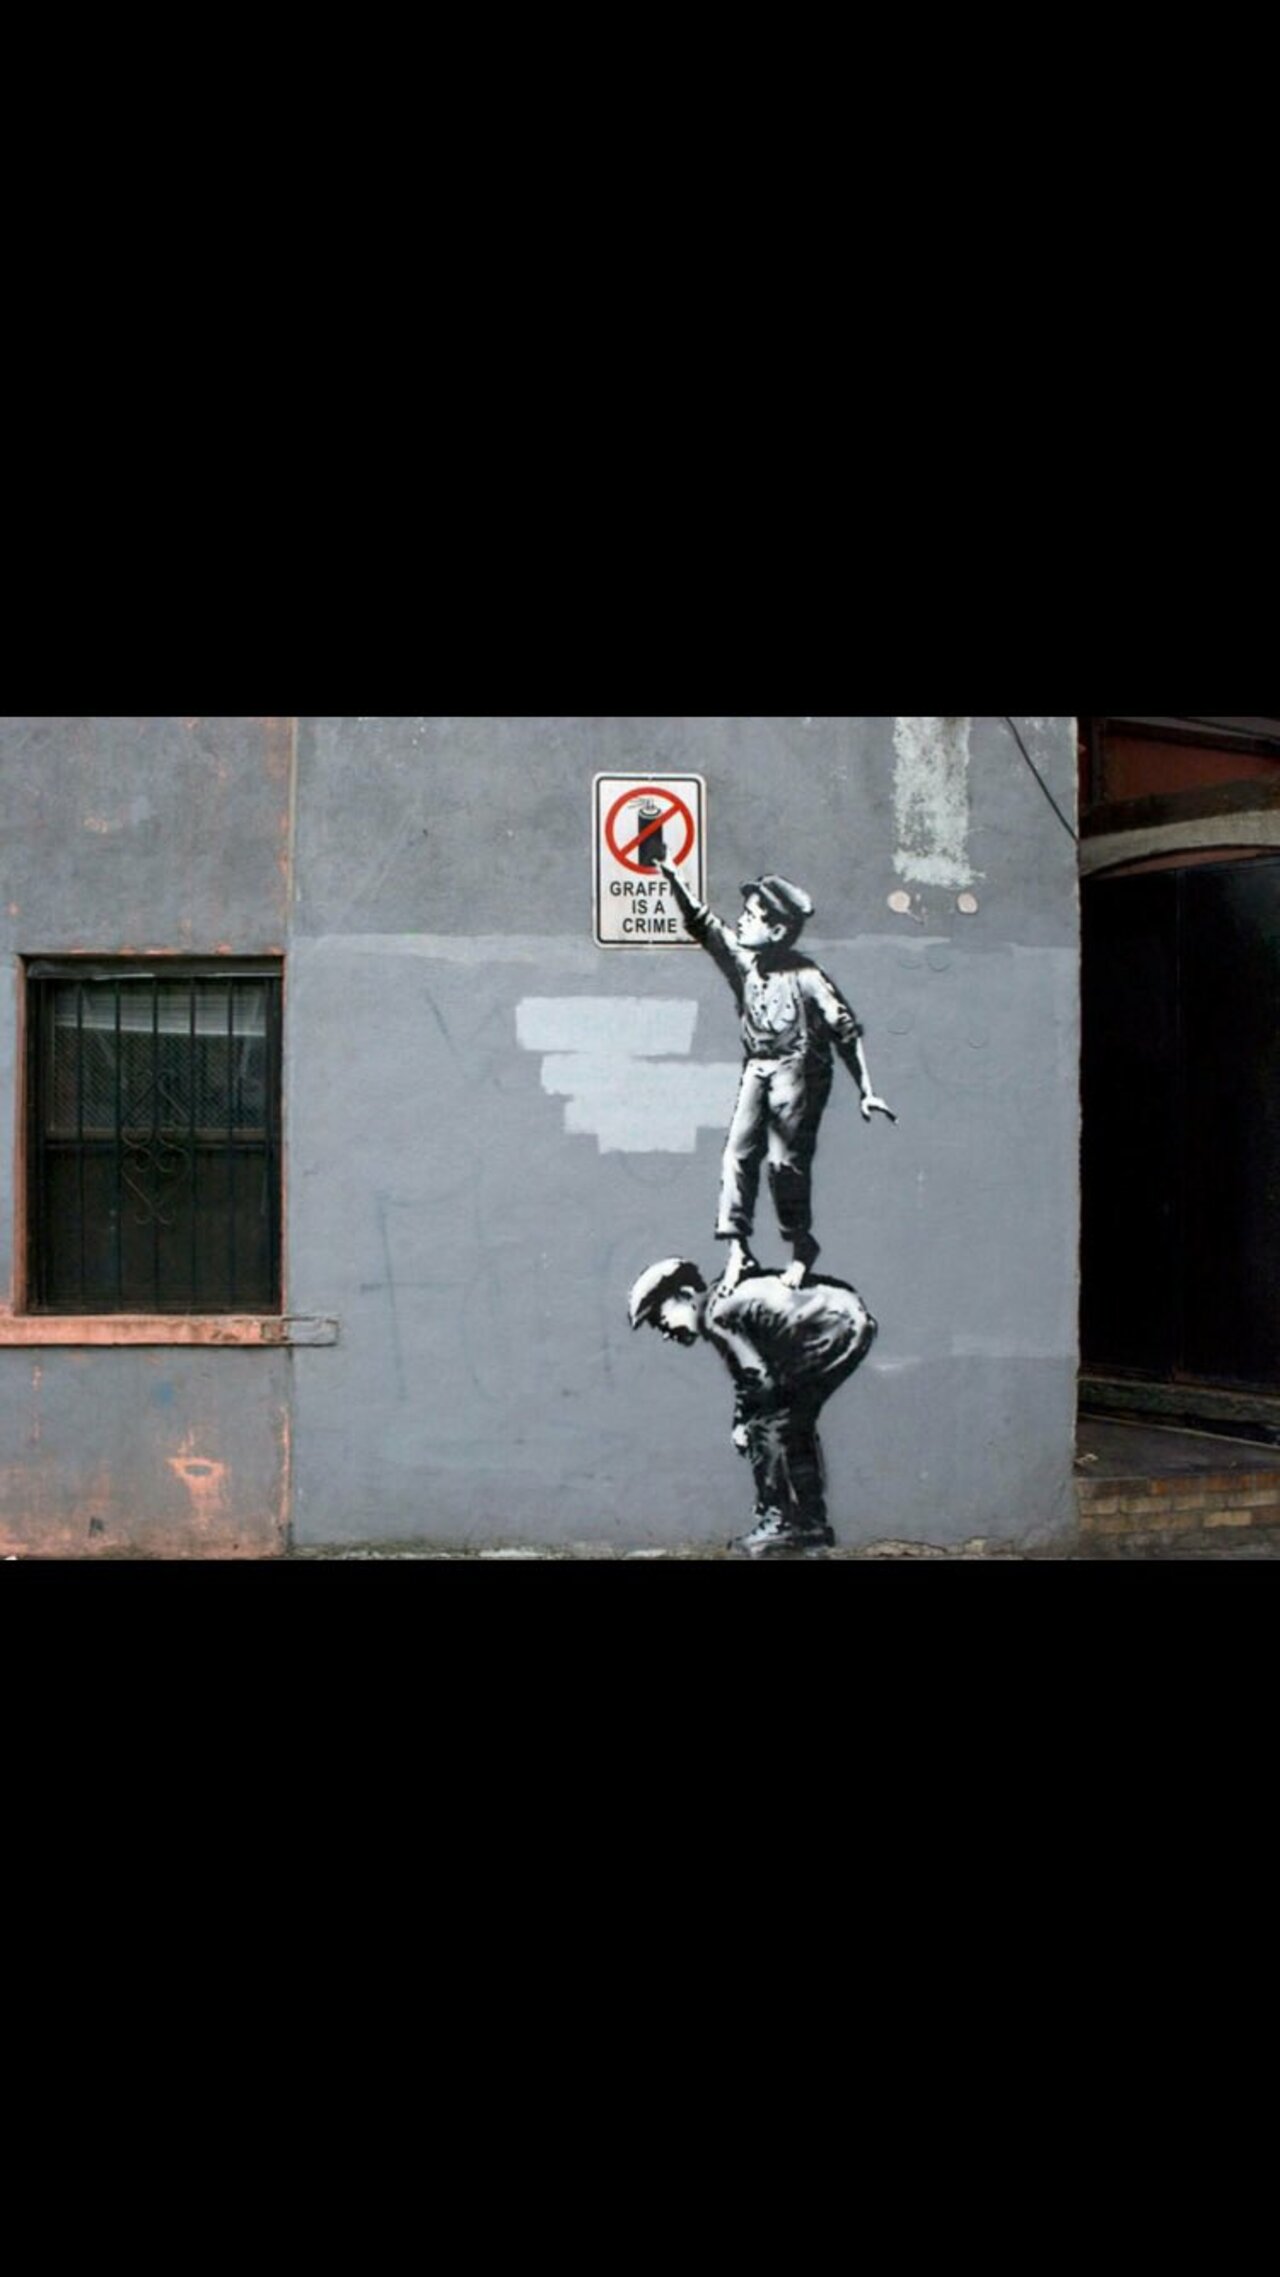 #FelizMartes a tod@s  #BuenosDias #bondia #goodmorning #Buongiorno #bonjour #7Nov #Banksy #StreetArt #graffiti https://t.co/dvEbUEGu4E